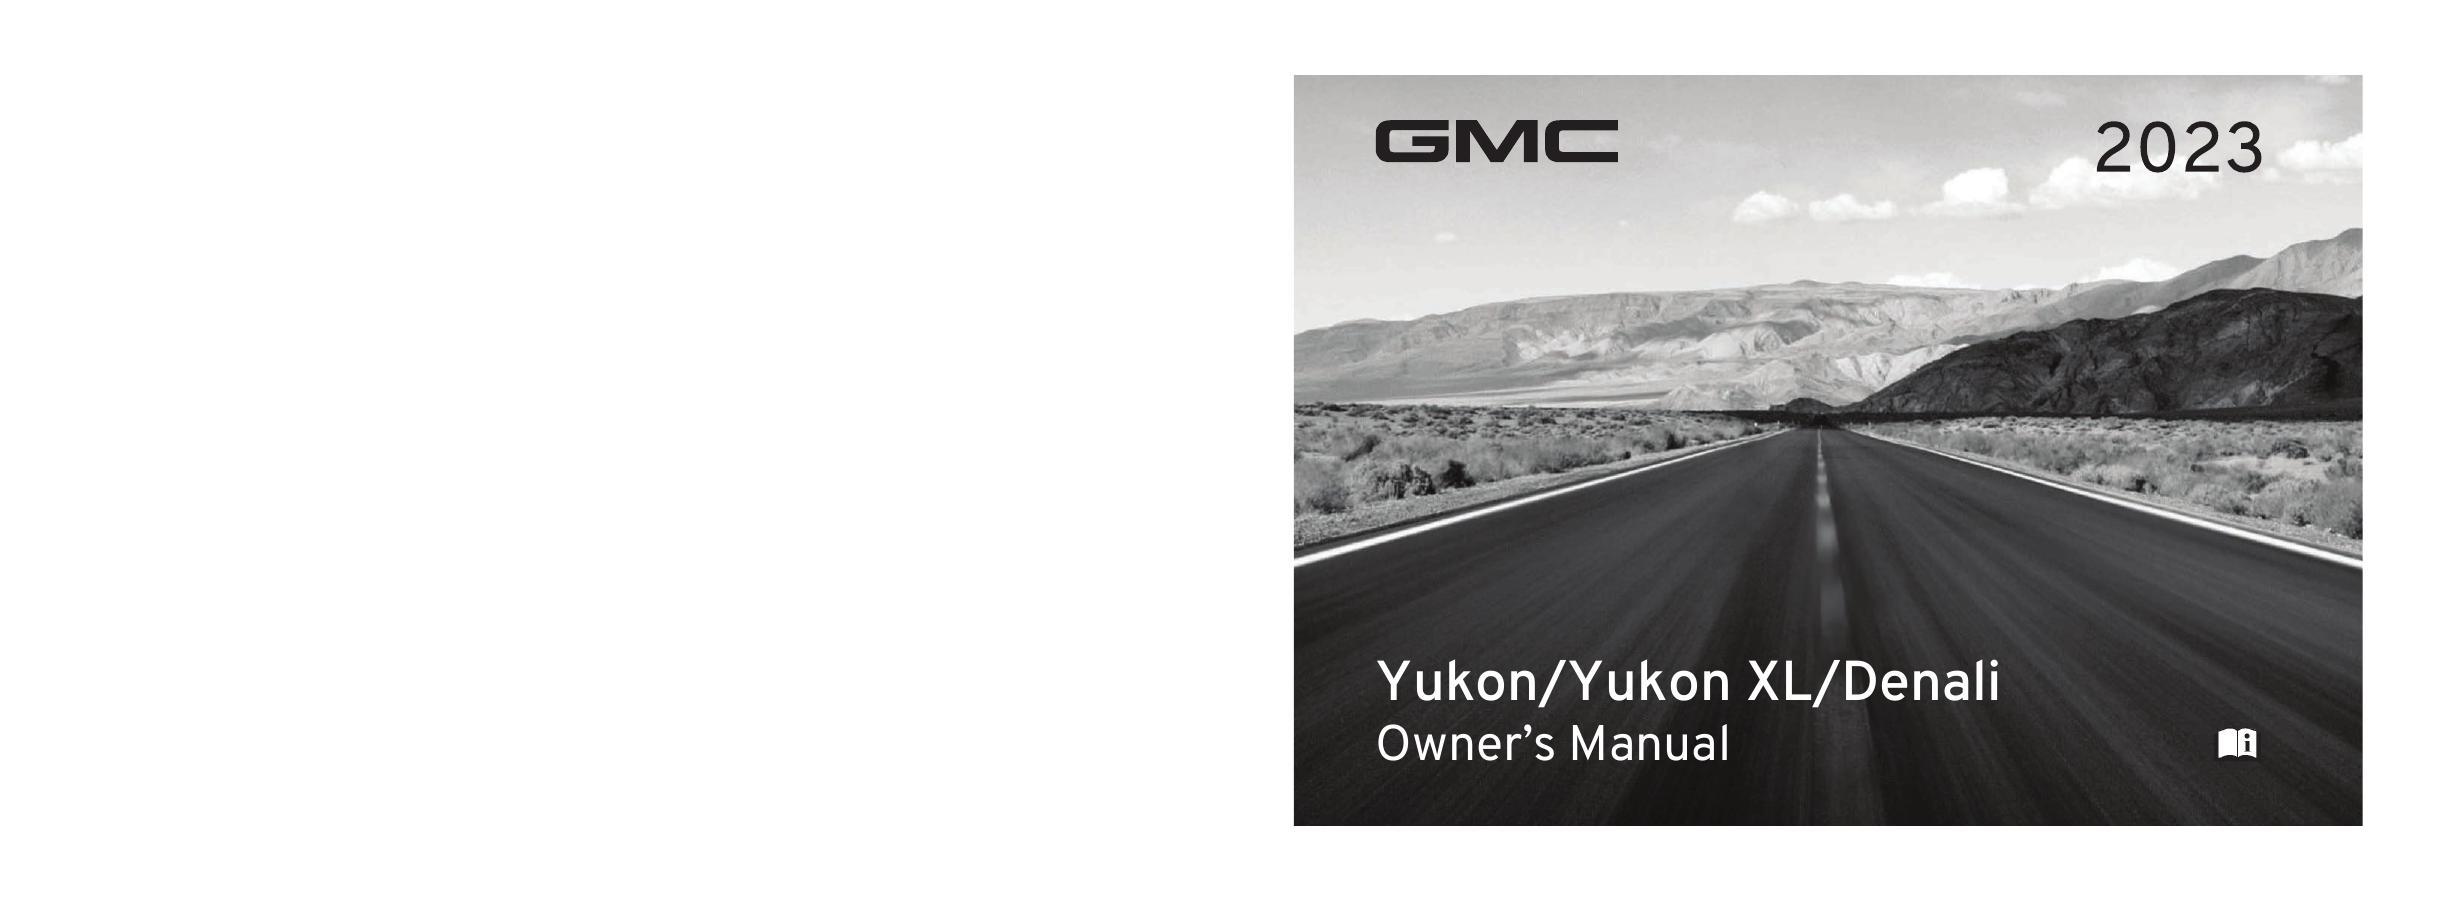 2023-gmc-yukonyukon-xldenali-owners-manual.pdf